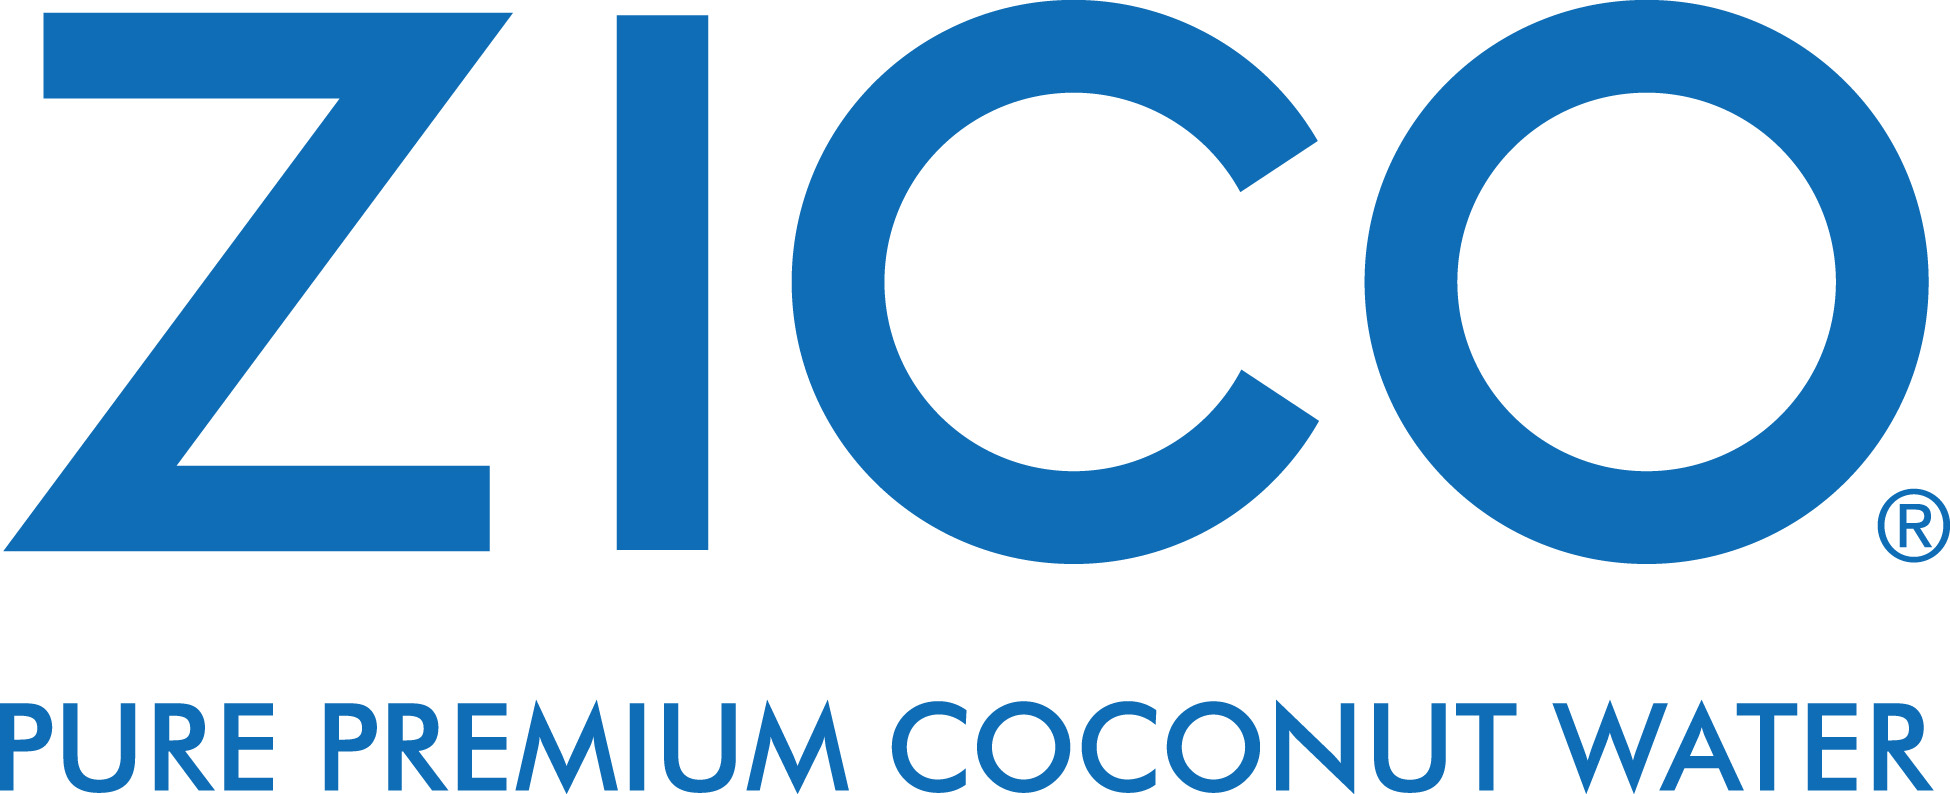 ZICO-Logo1.jpg